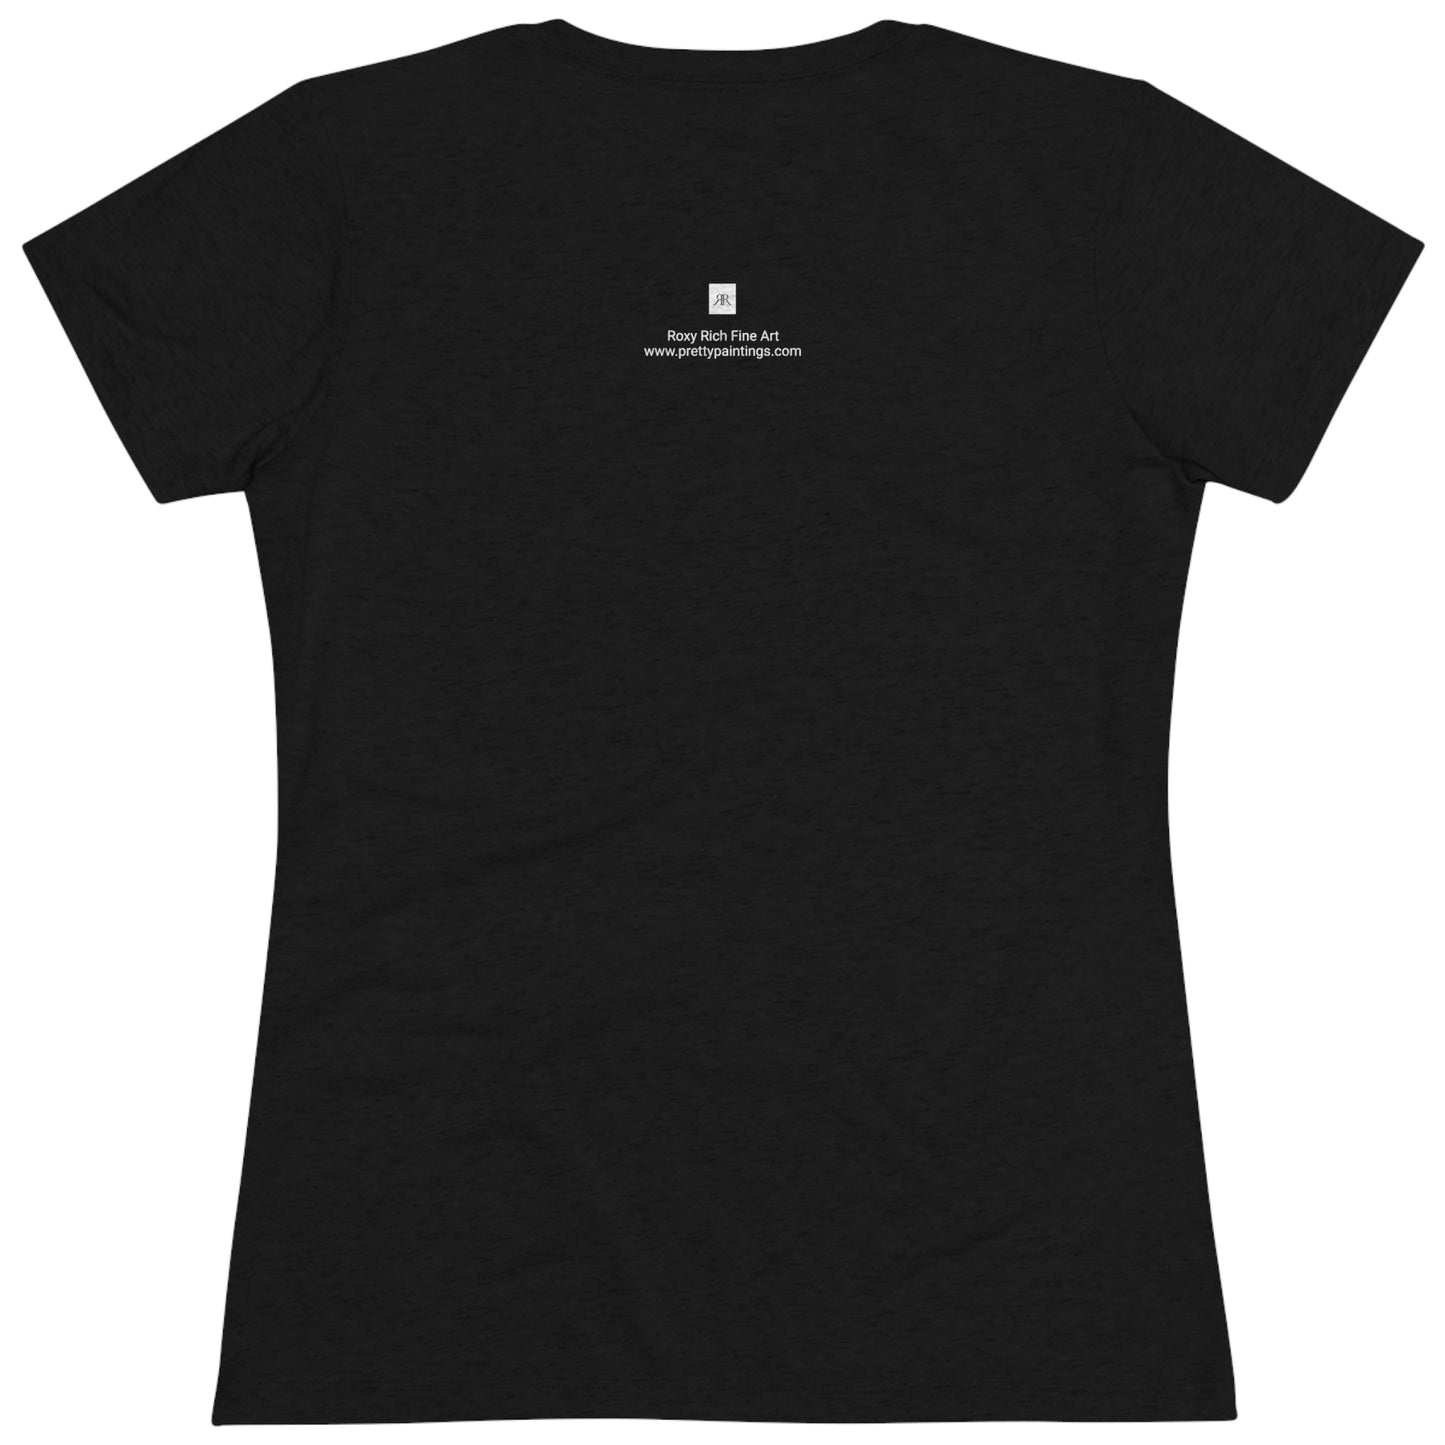 Temecula Camiseta Triblend ajustada para mujer Camiseta Temecula souvenir "Bottle and Blooms"